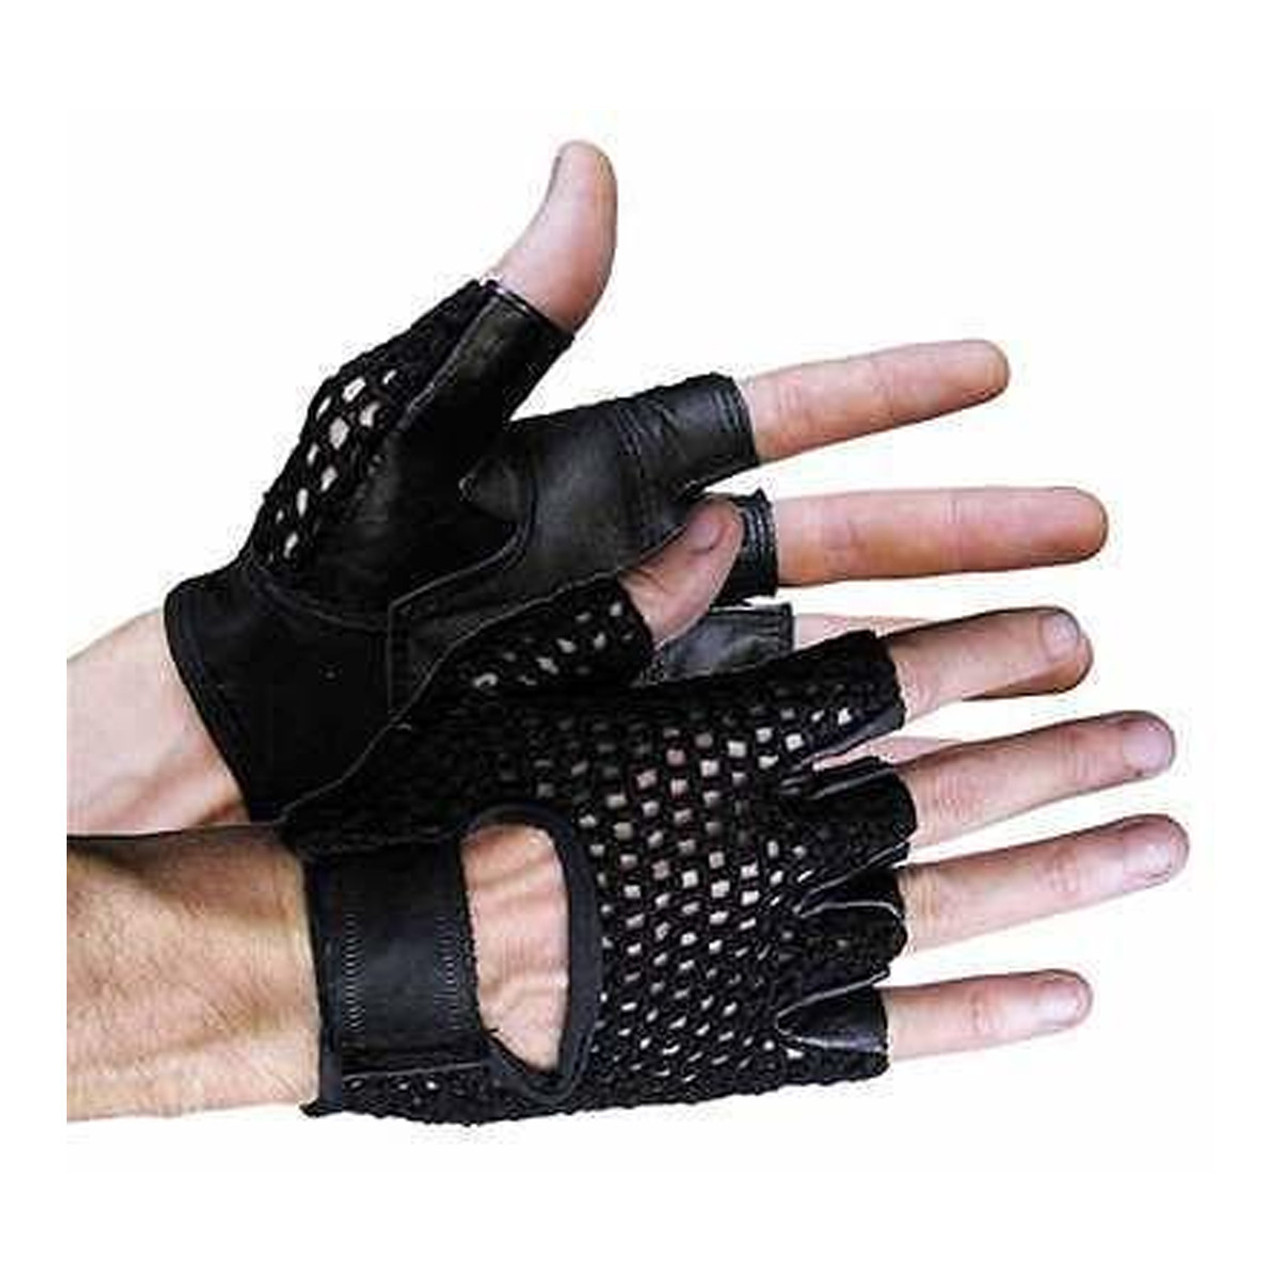 where to find fingerless gloves